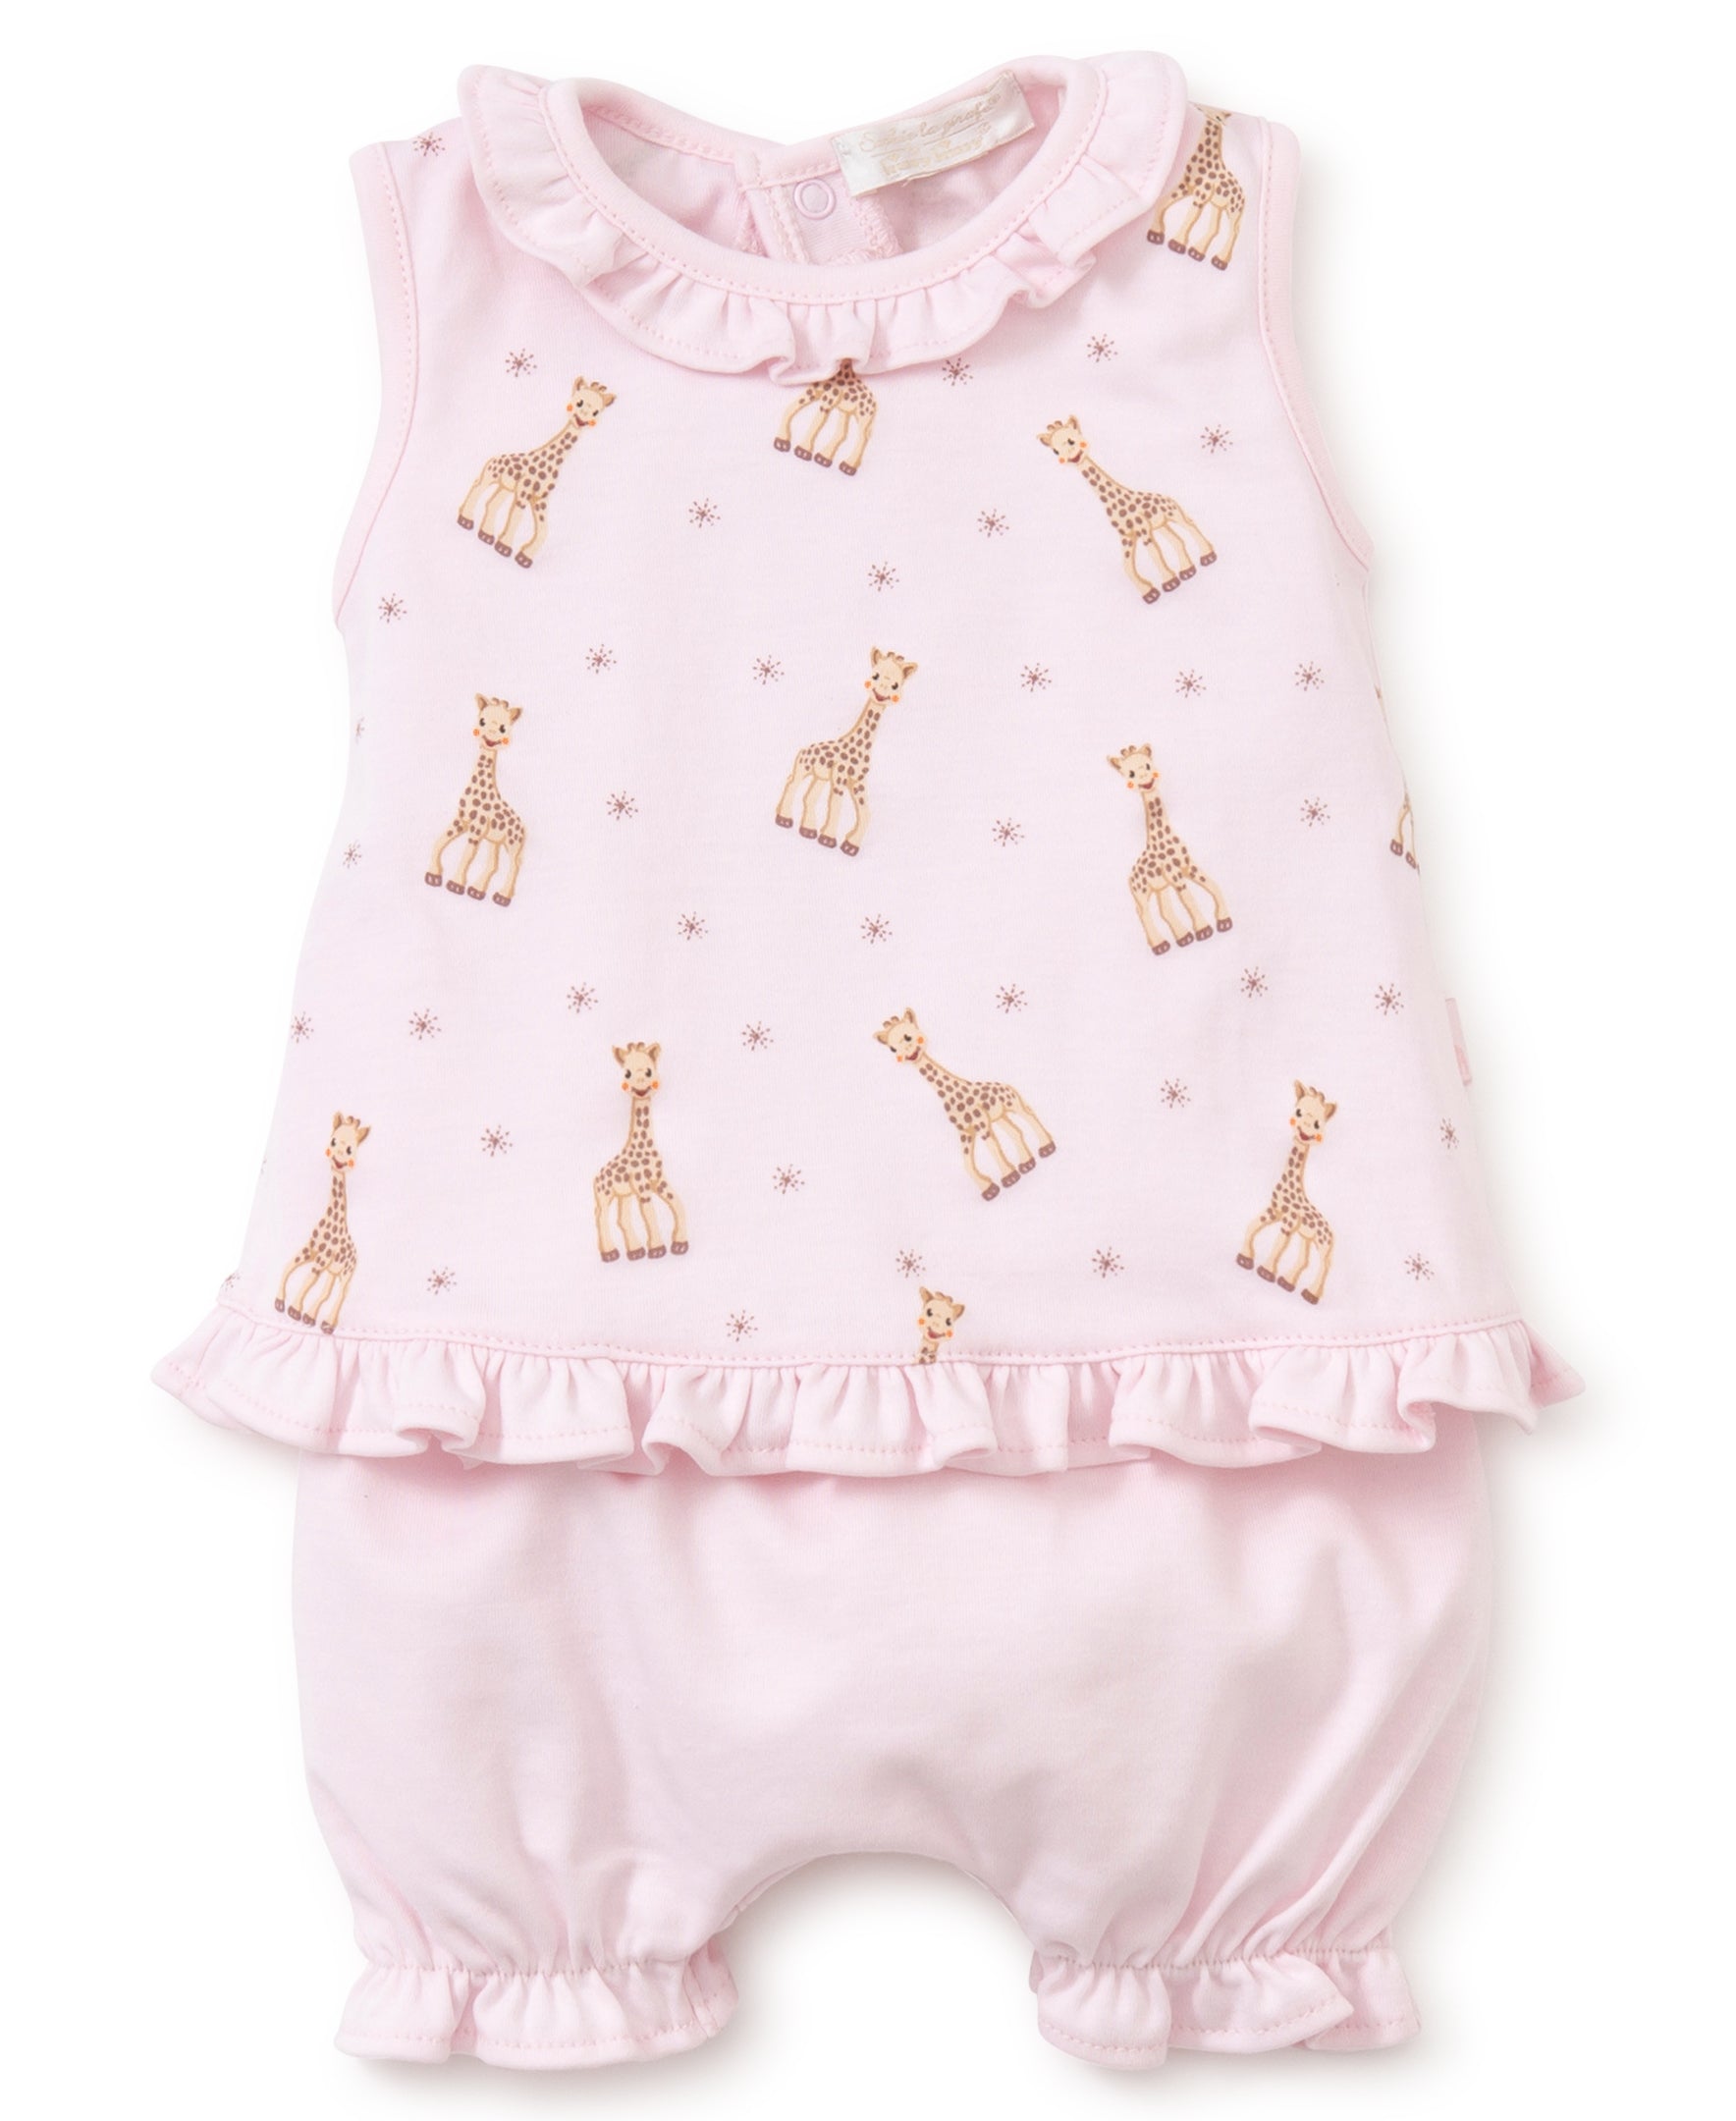 Sophie la girafe Pink Print Sunsuit - Kissy Kissy